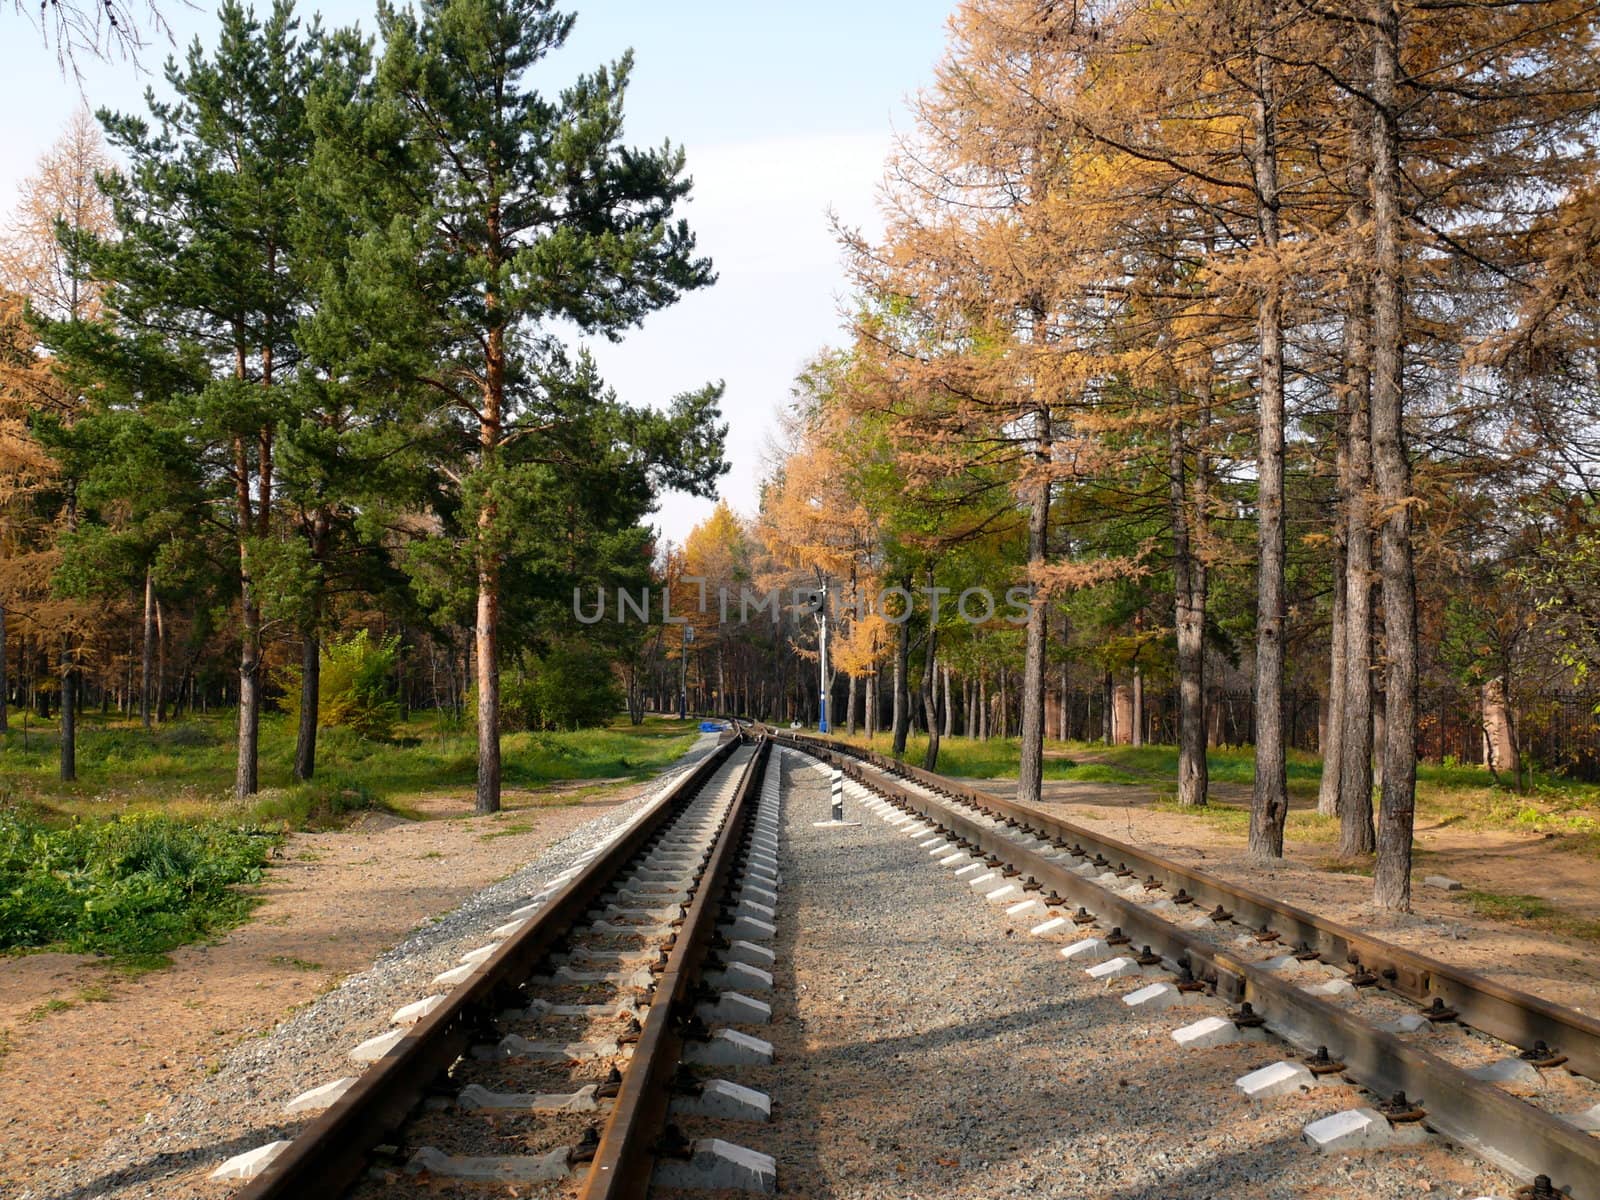 Railroad for kids in Chelyabinsk park by Stoyanov